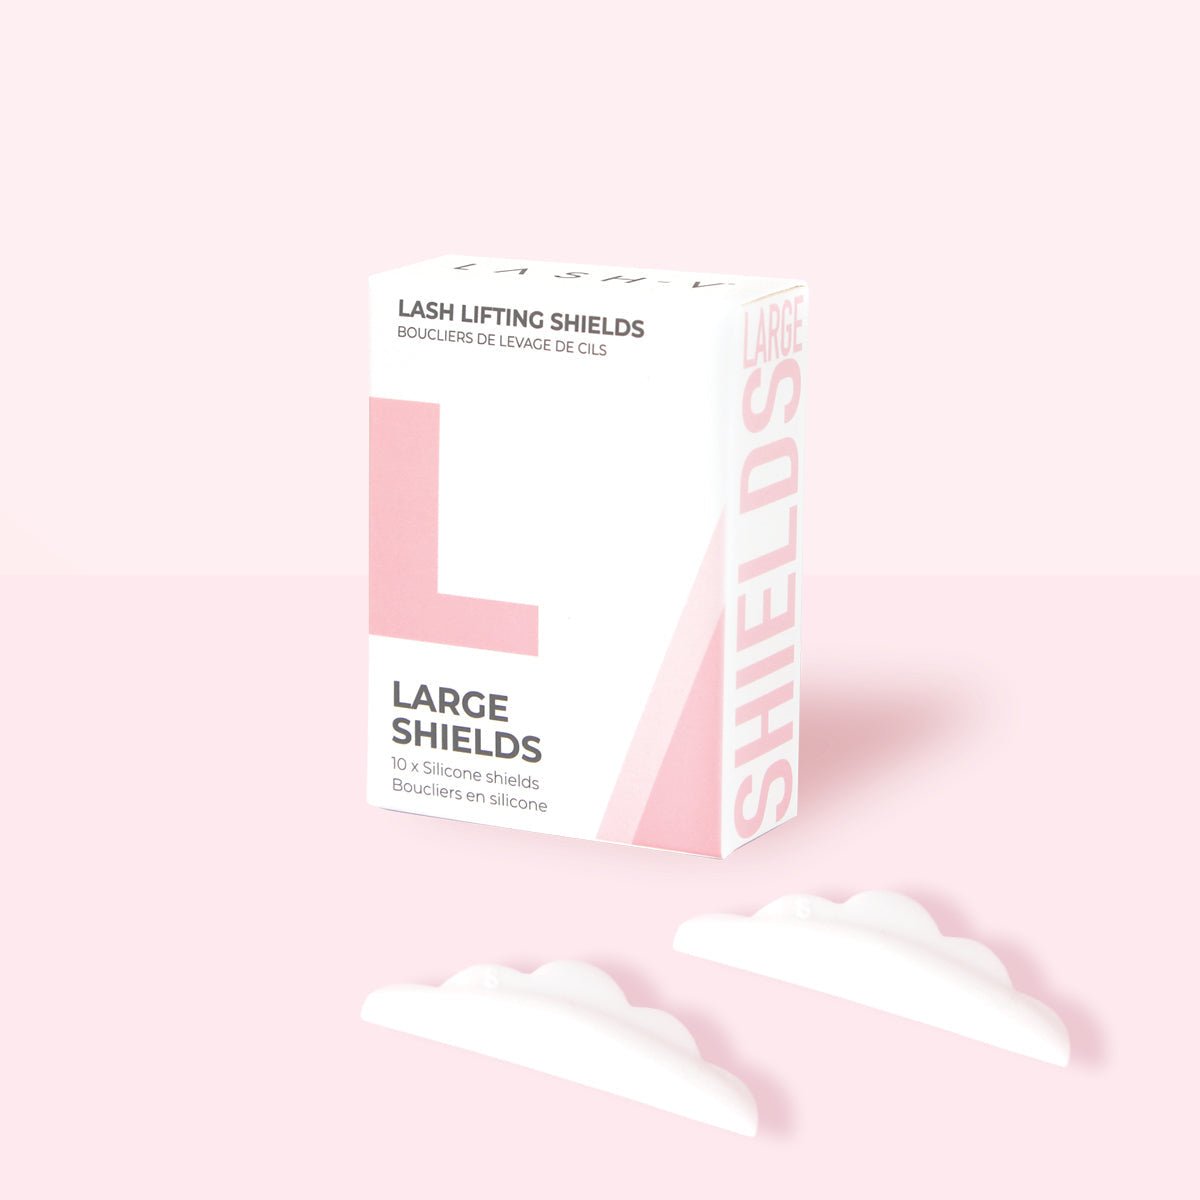 Lash Lift Shields - Large Shields - LASH V